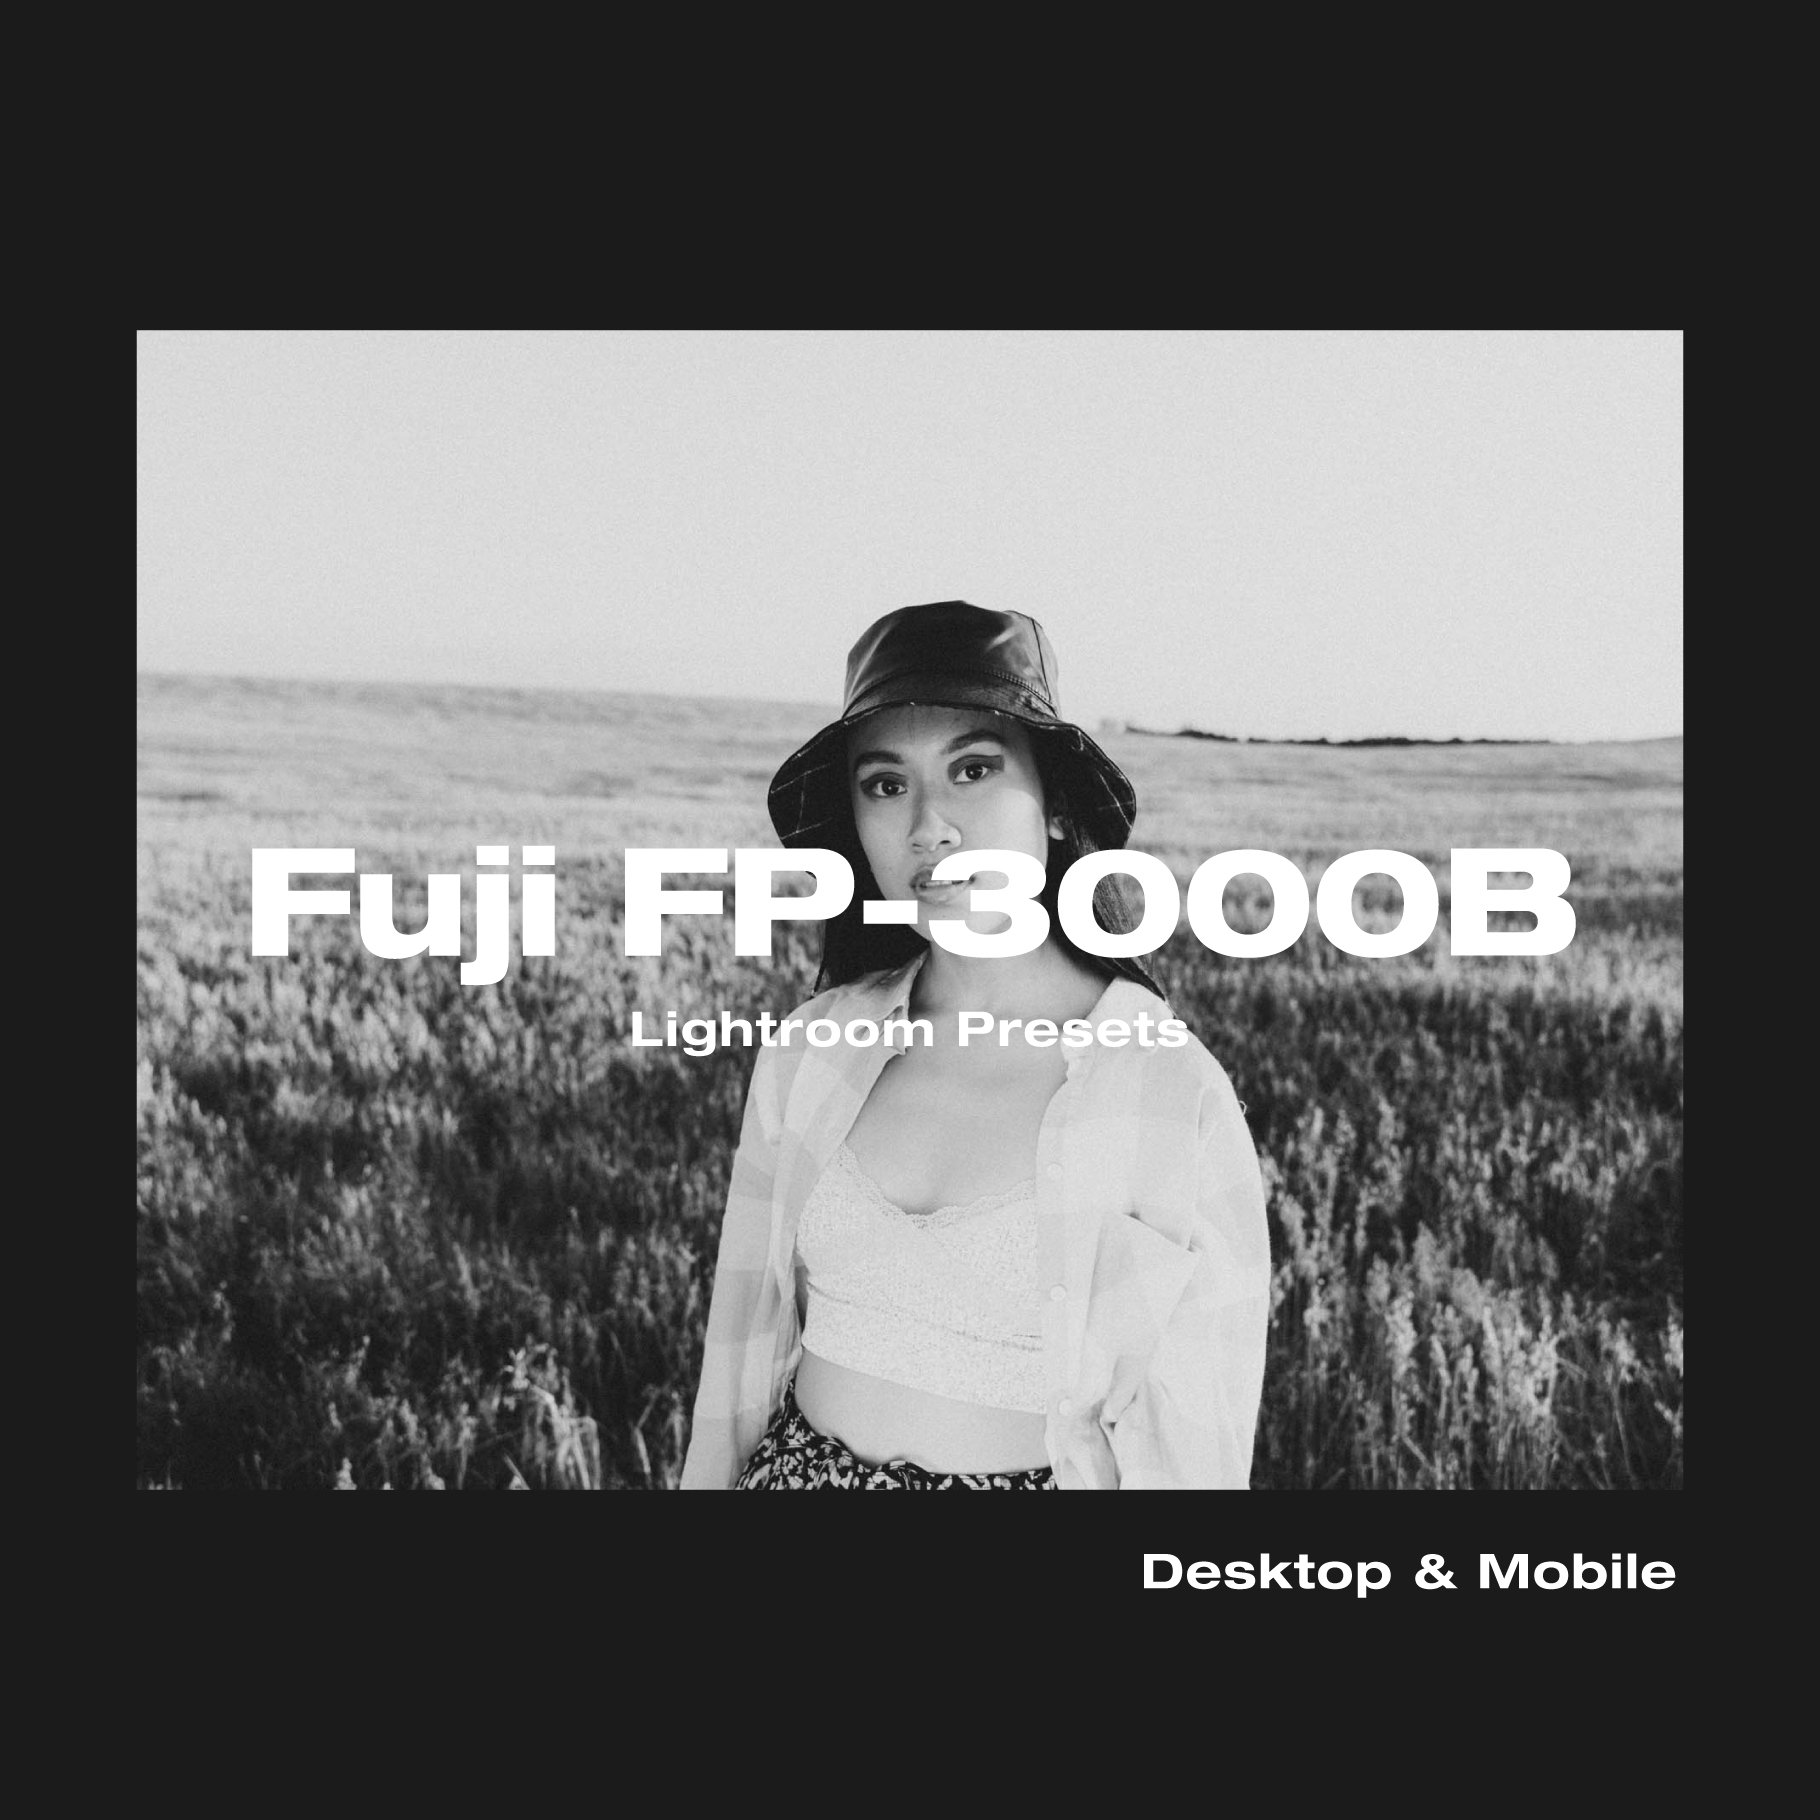 Fujifilm FP-3000B Lightroom Presetscover image.